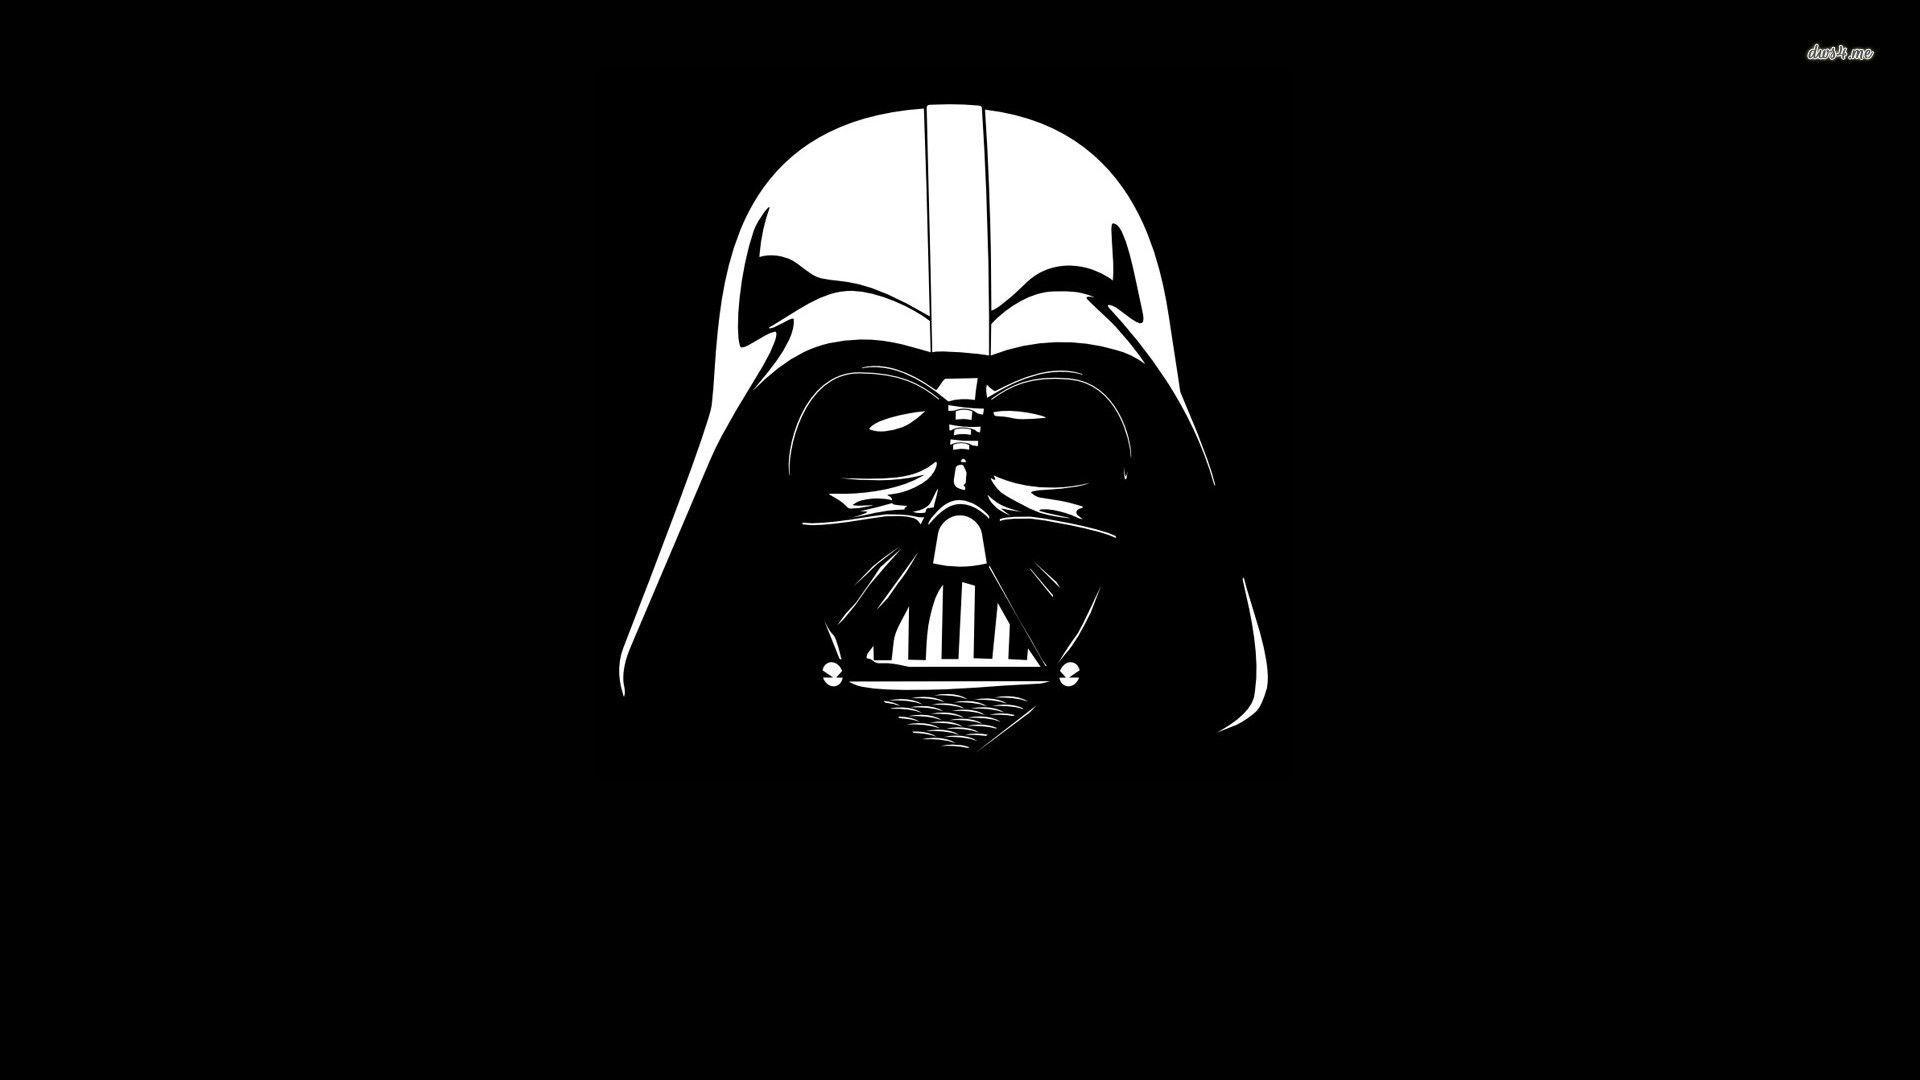 1920x1080 Star Wars Darth Vader Wallpaper Desktop Background Movies.  Darth vader hình nền HD, Darth vader hình nền, Darth vader